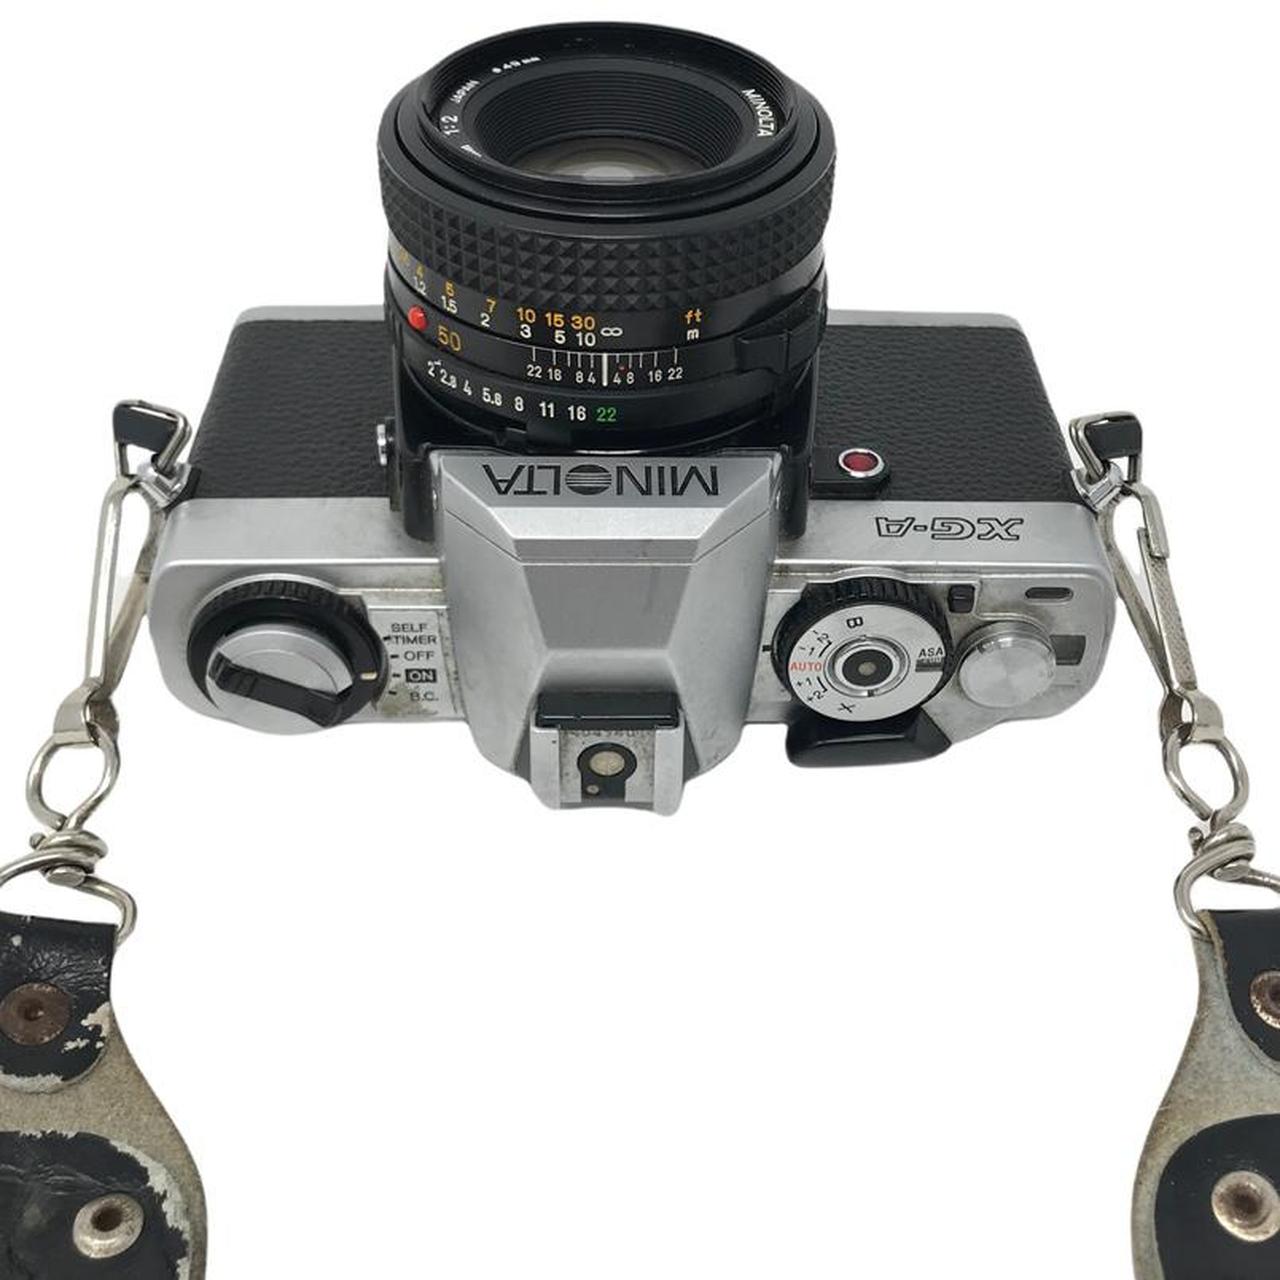 Minolta Cameras-and-accessories (3)